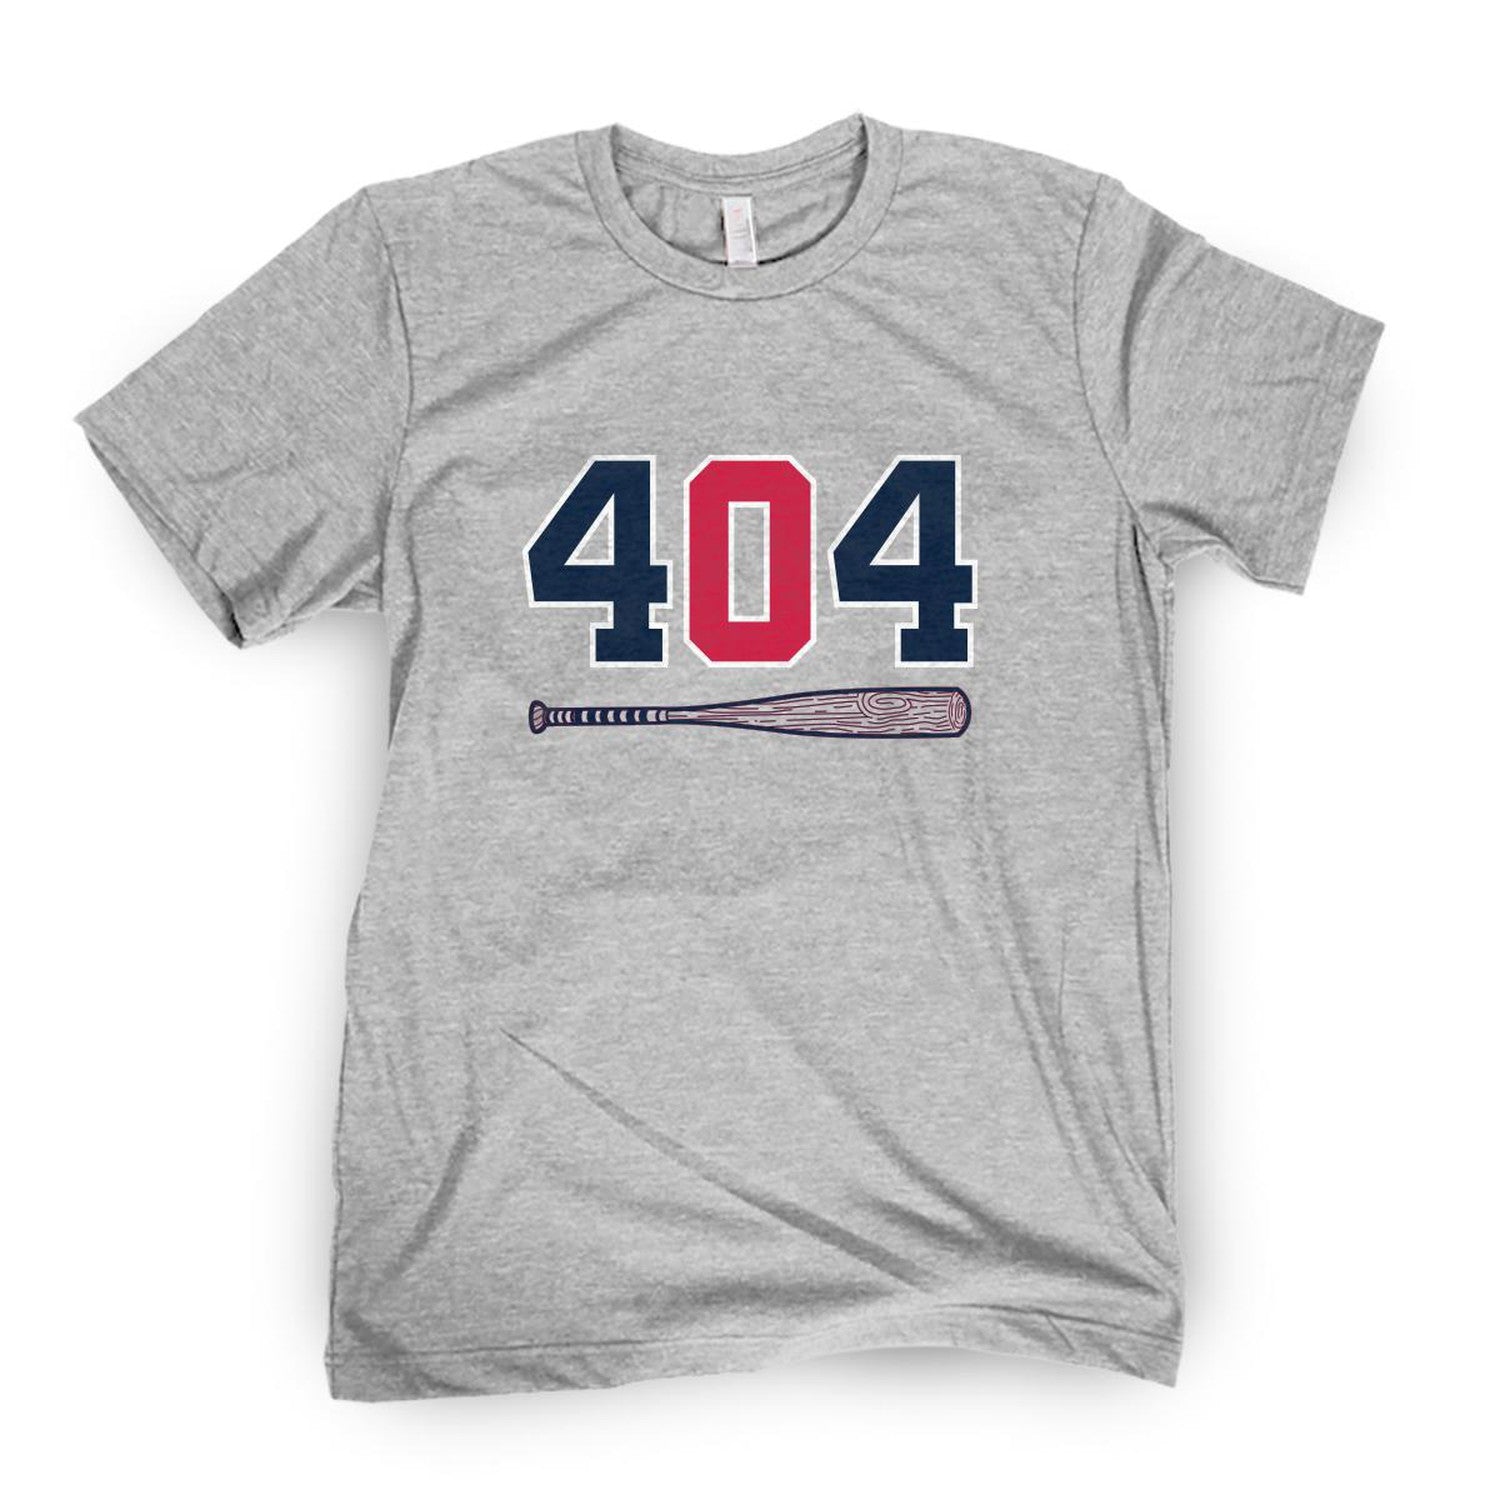 404 Bat Tee - Barstool Sports T-Shirts